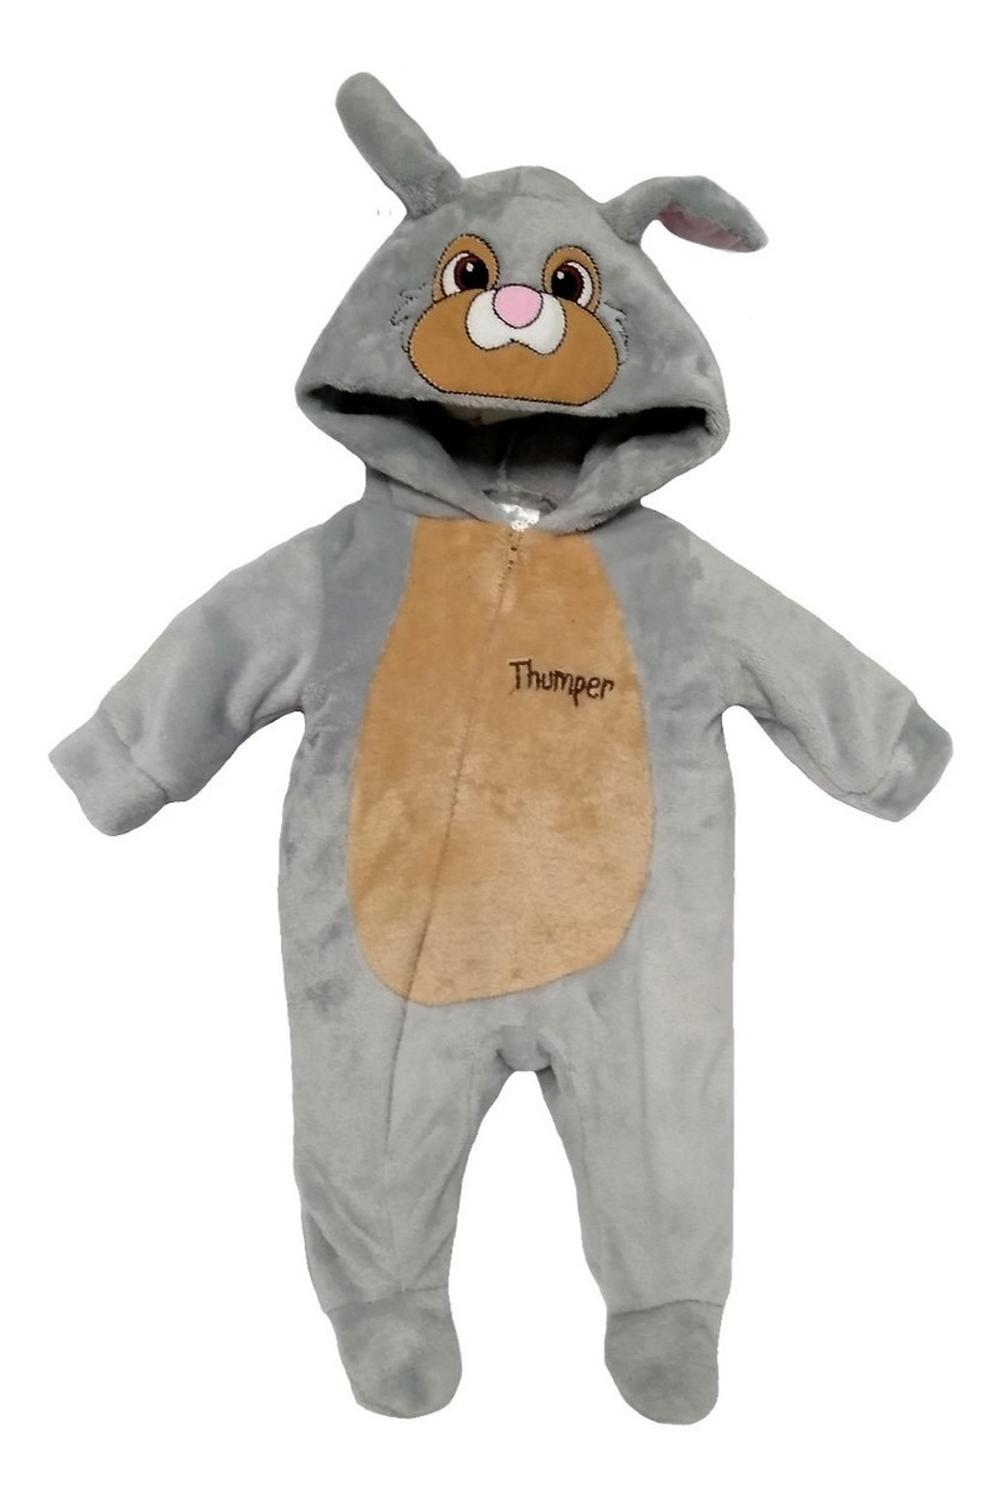 Kit 3 Mamelucos Disney para Bebé con Gorro Bordado Thumper, Pua, Minnie